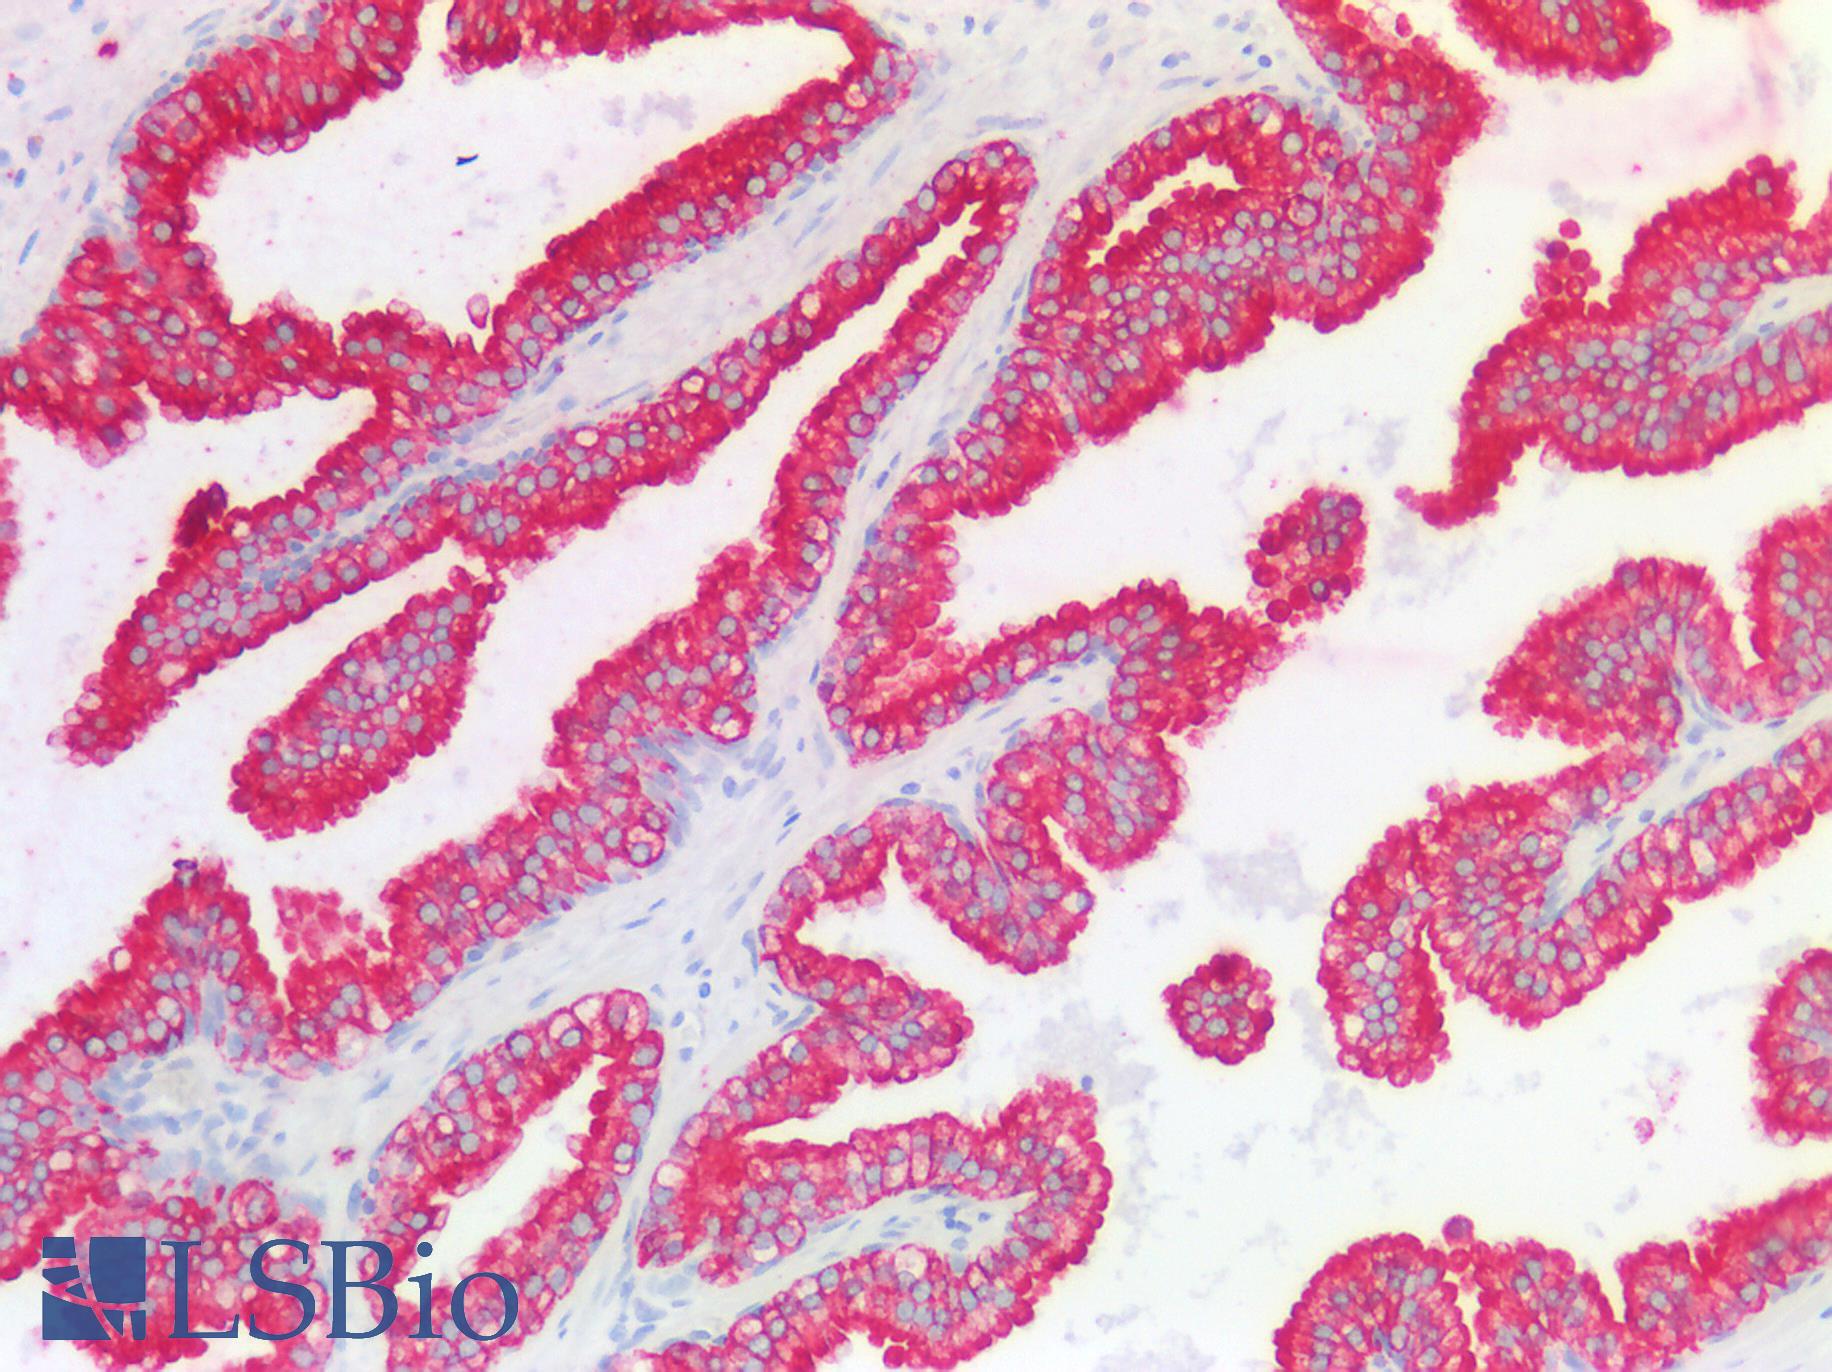 HSD3B7 Antibody - Human Prostate: Formalin-Fixed, Paraffin-Embedded (FFPE)